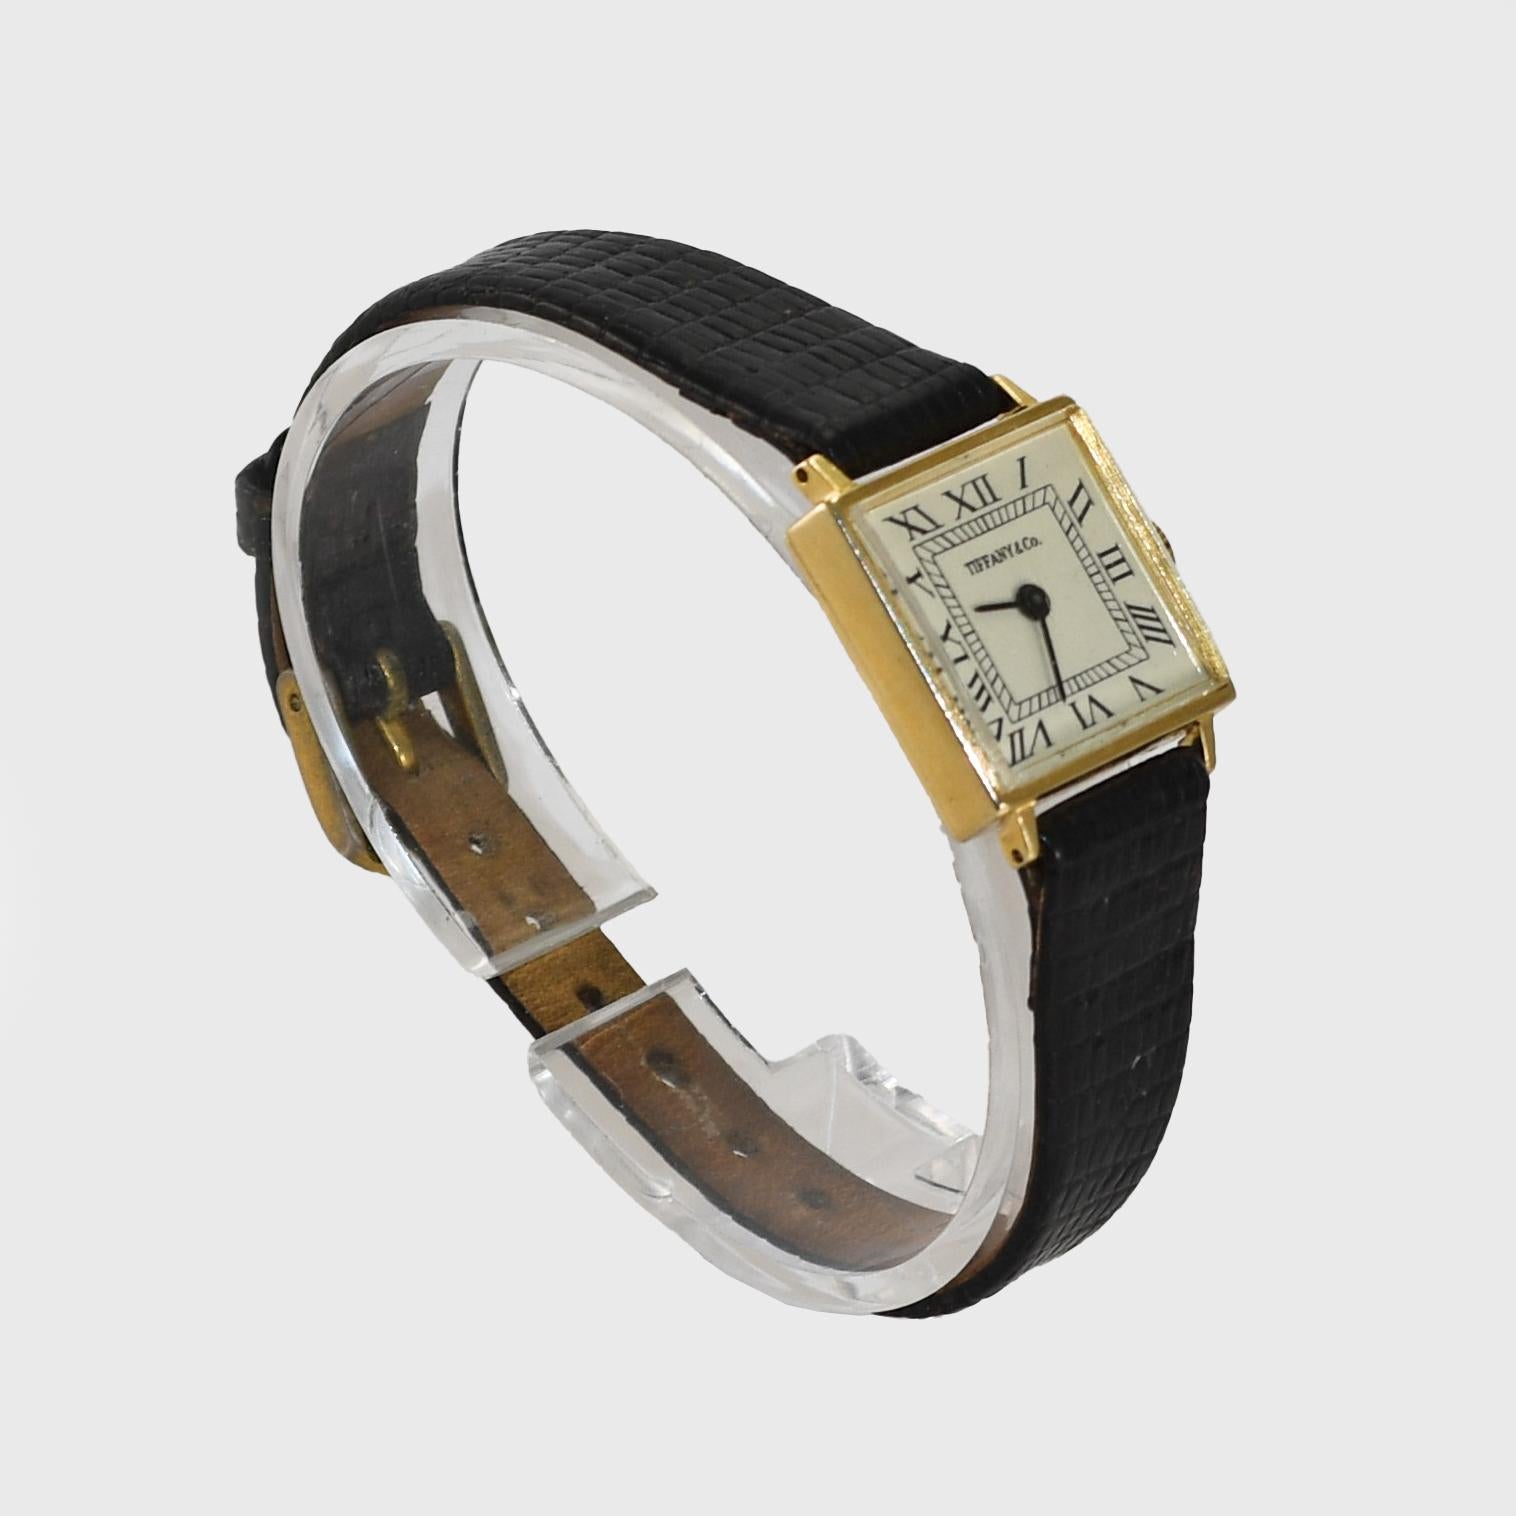 tiffany & co 14k gold watch